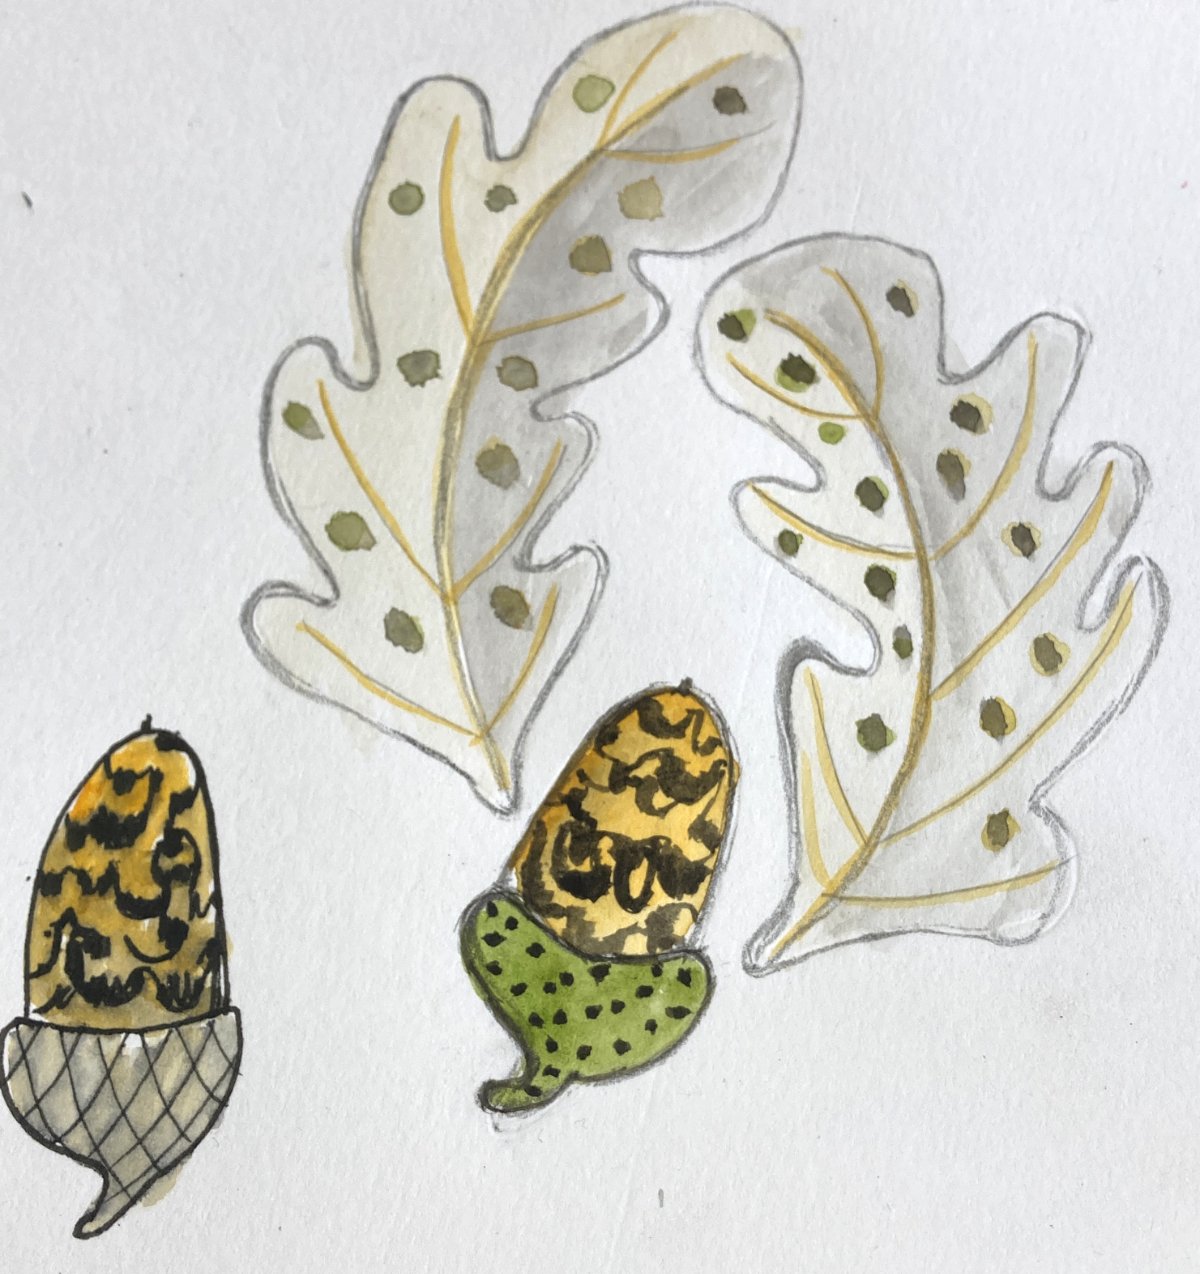 Leaves and acorns illustration